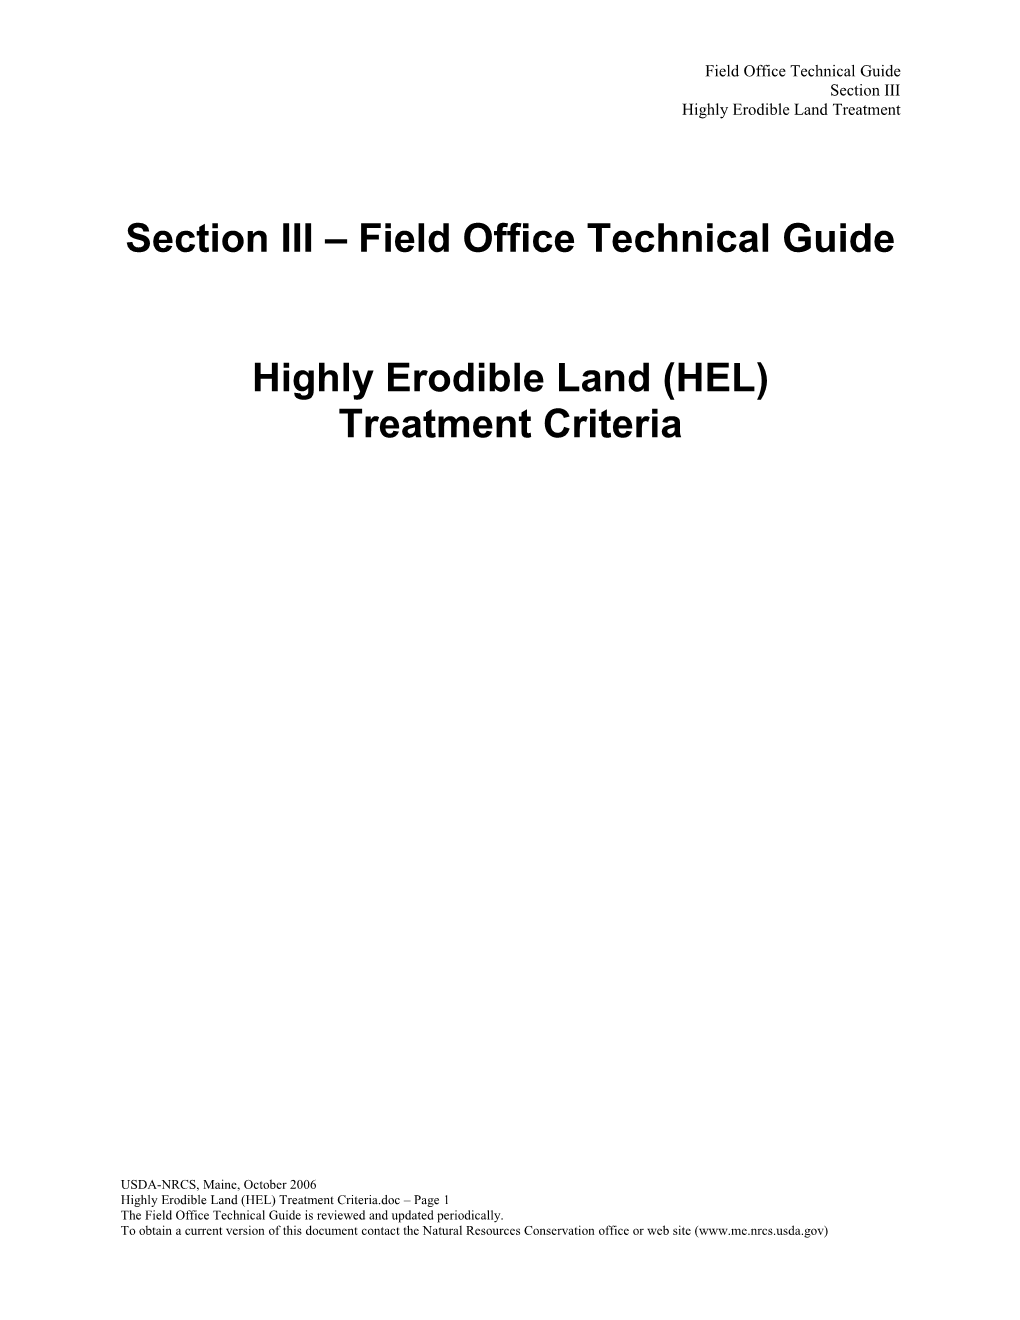 Highly Erodible Land HEL Treatment Criteria.PDF